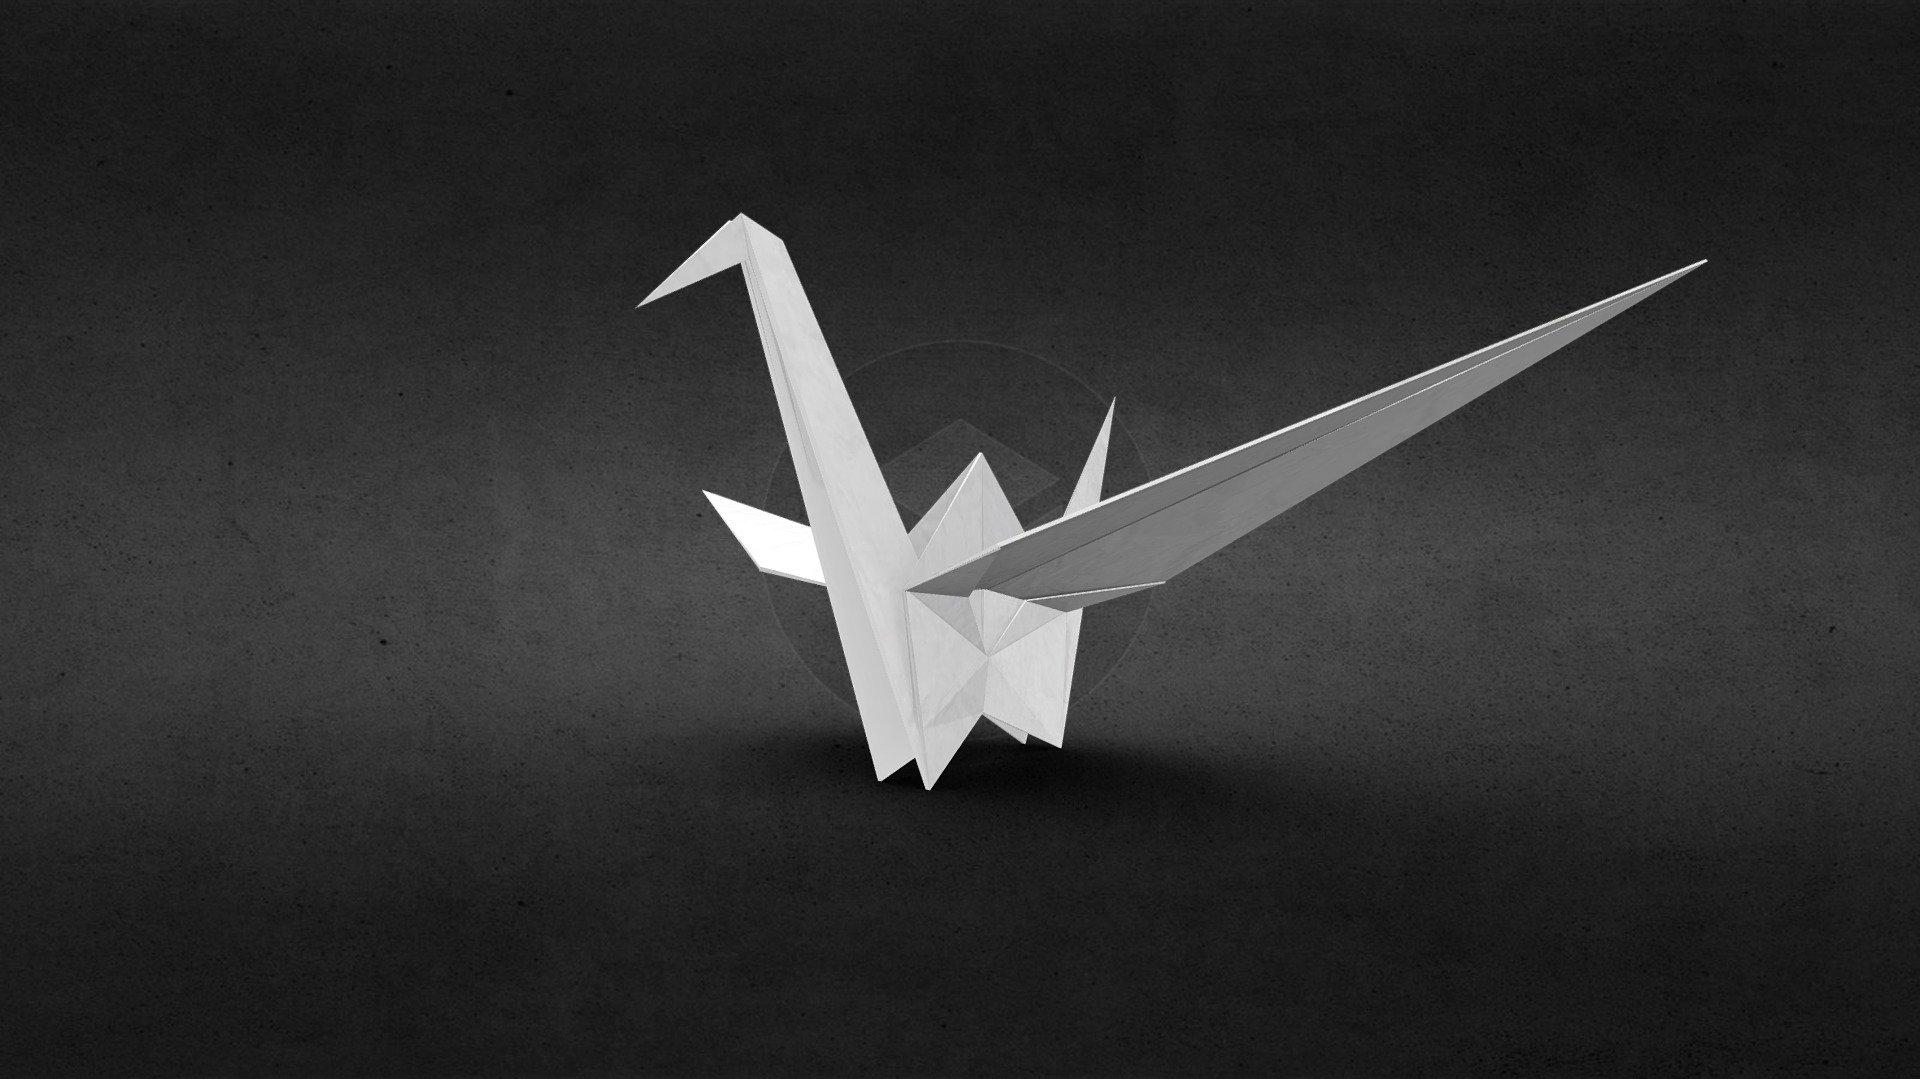 3d Origami Crane Model By Juang3d